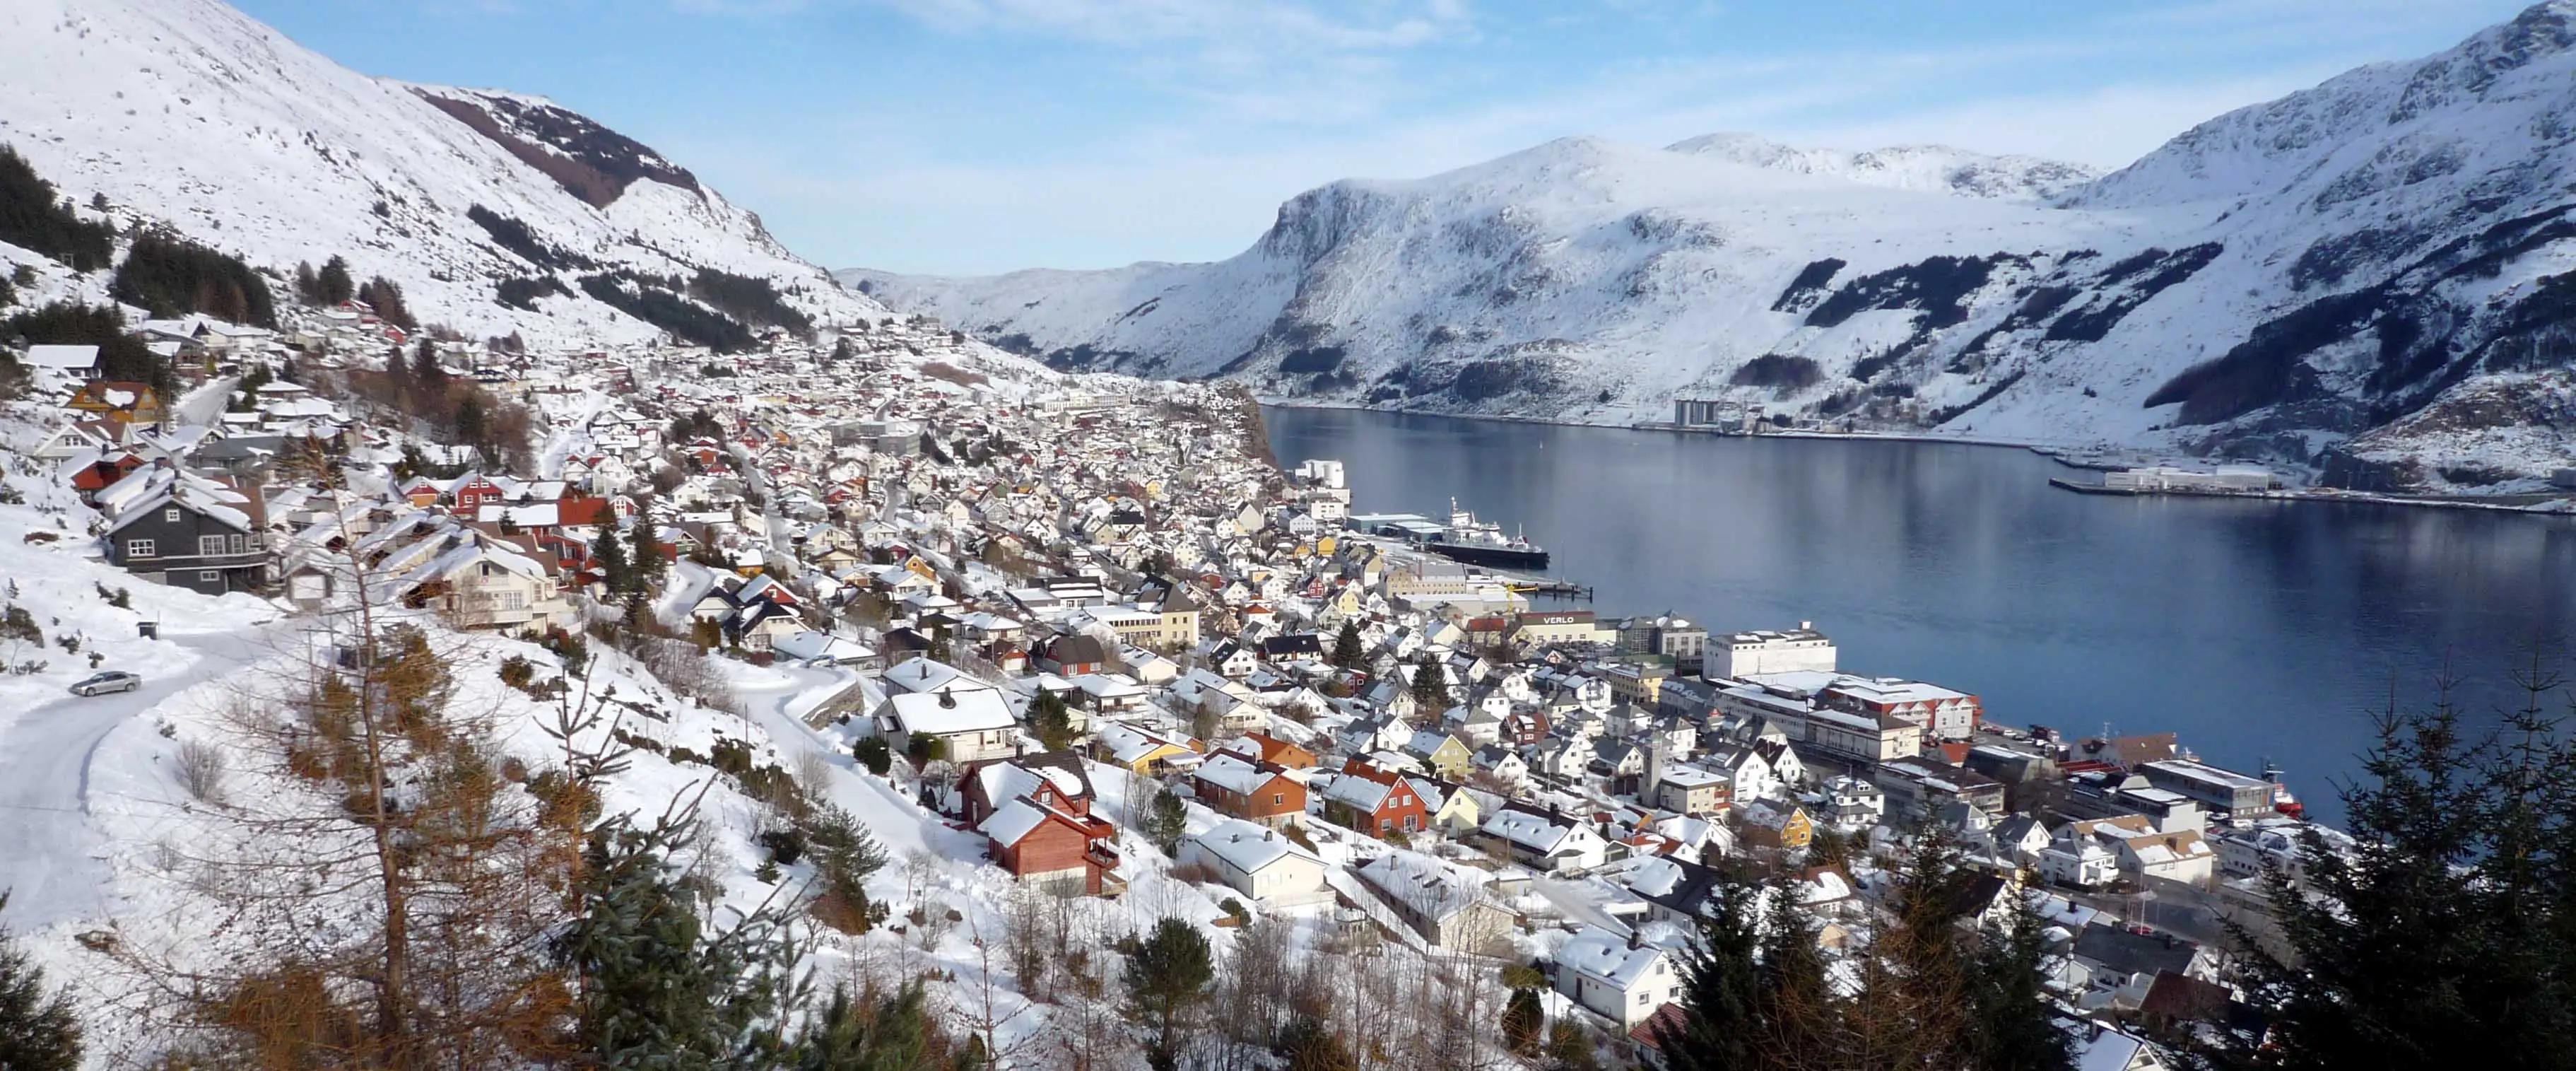 Måløy sous la neige en hiver - Norvège